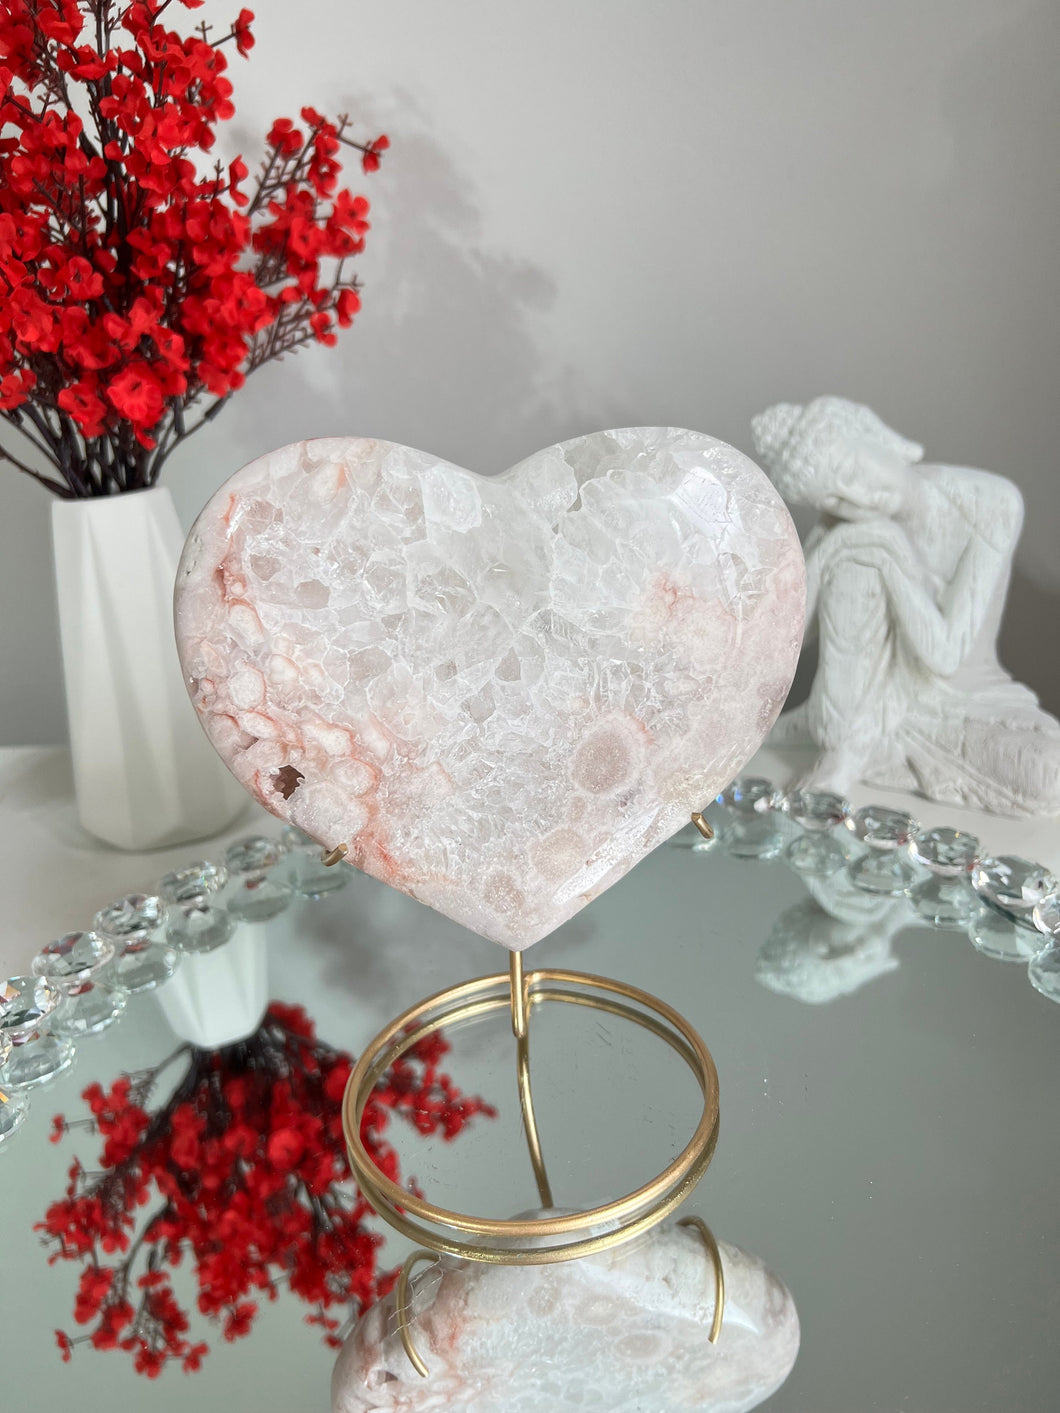 Druzy Pink amethyst heart healing crystal 2160 1